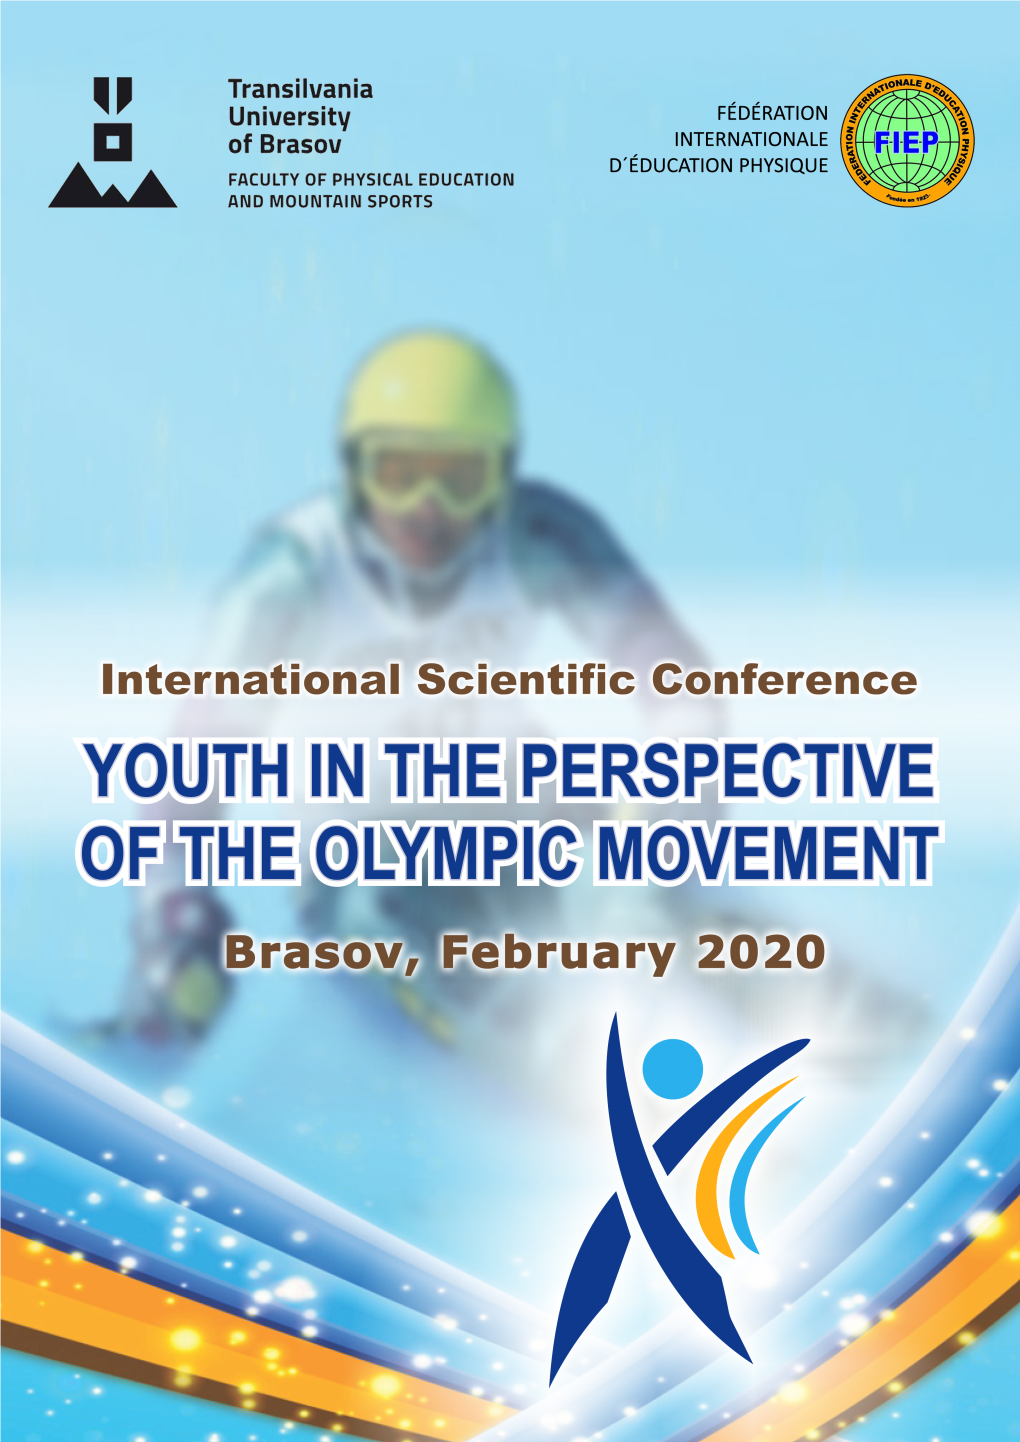 International Scientific Conference 27-28 February 2020, Brașov